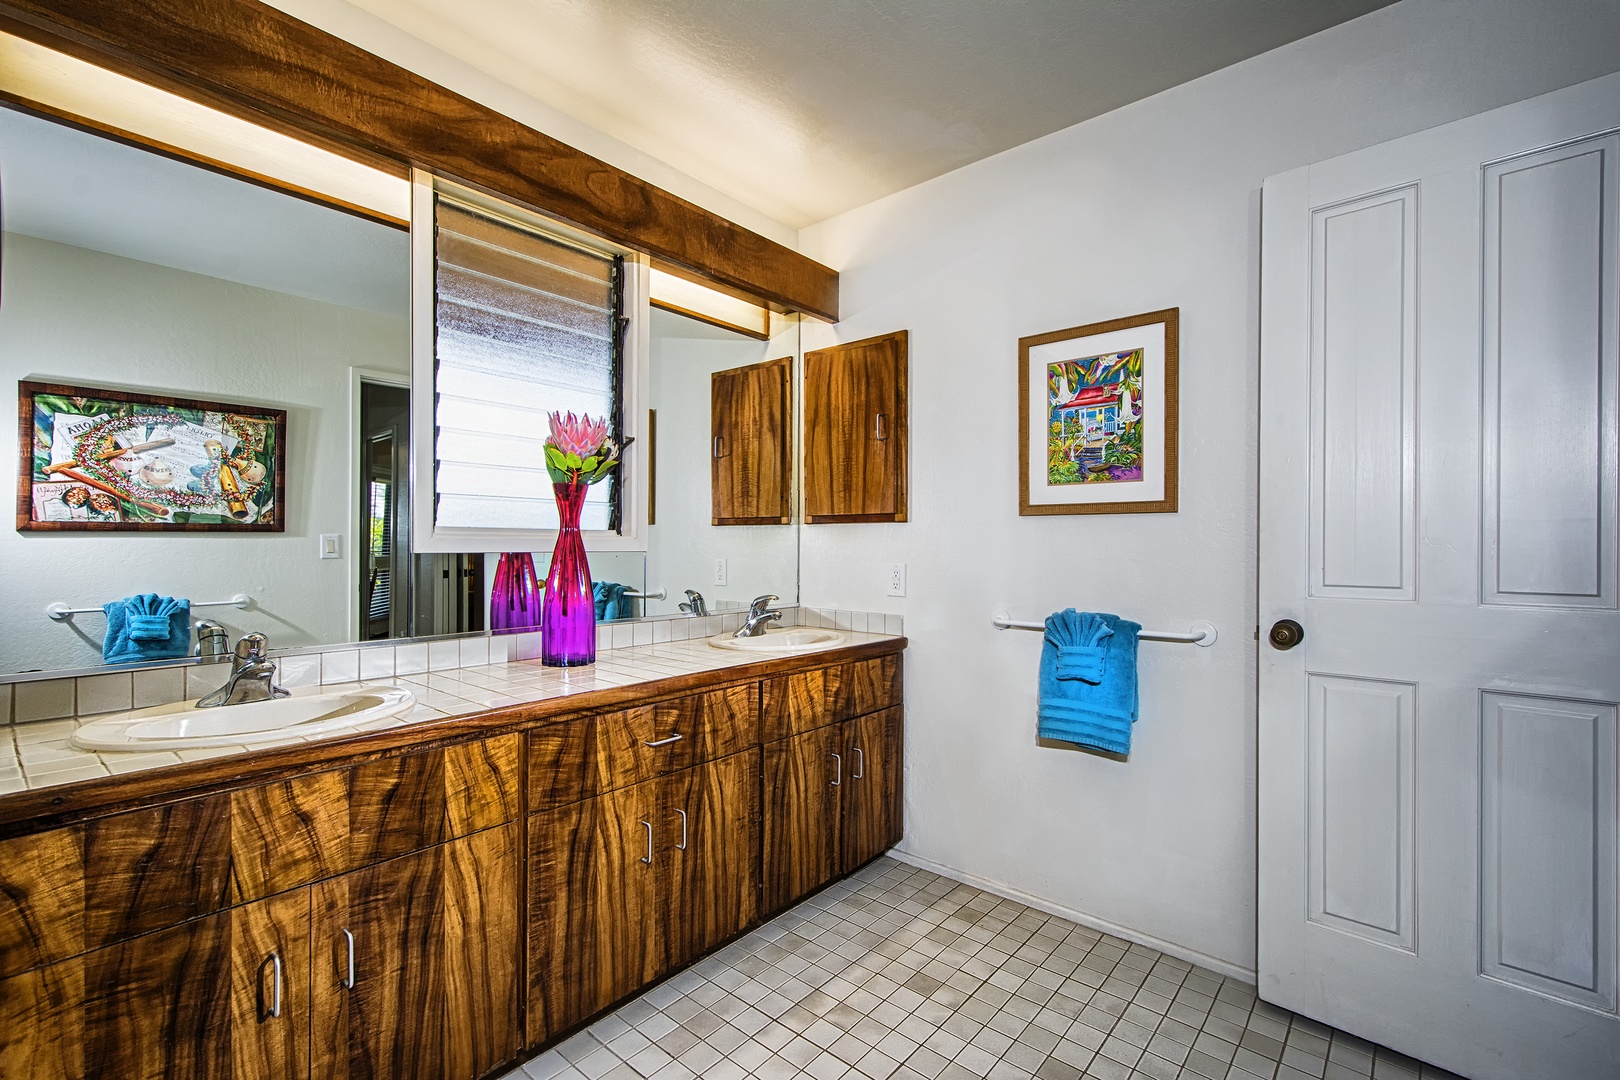 Kailua Kona Vacation Rentals, Kanaloa 701 - Primary bathroom with dual vanities